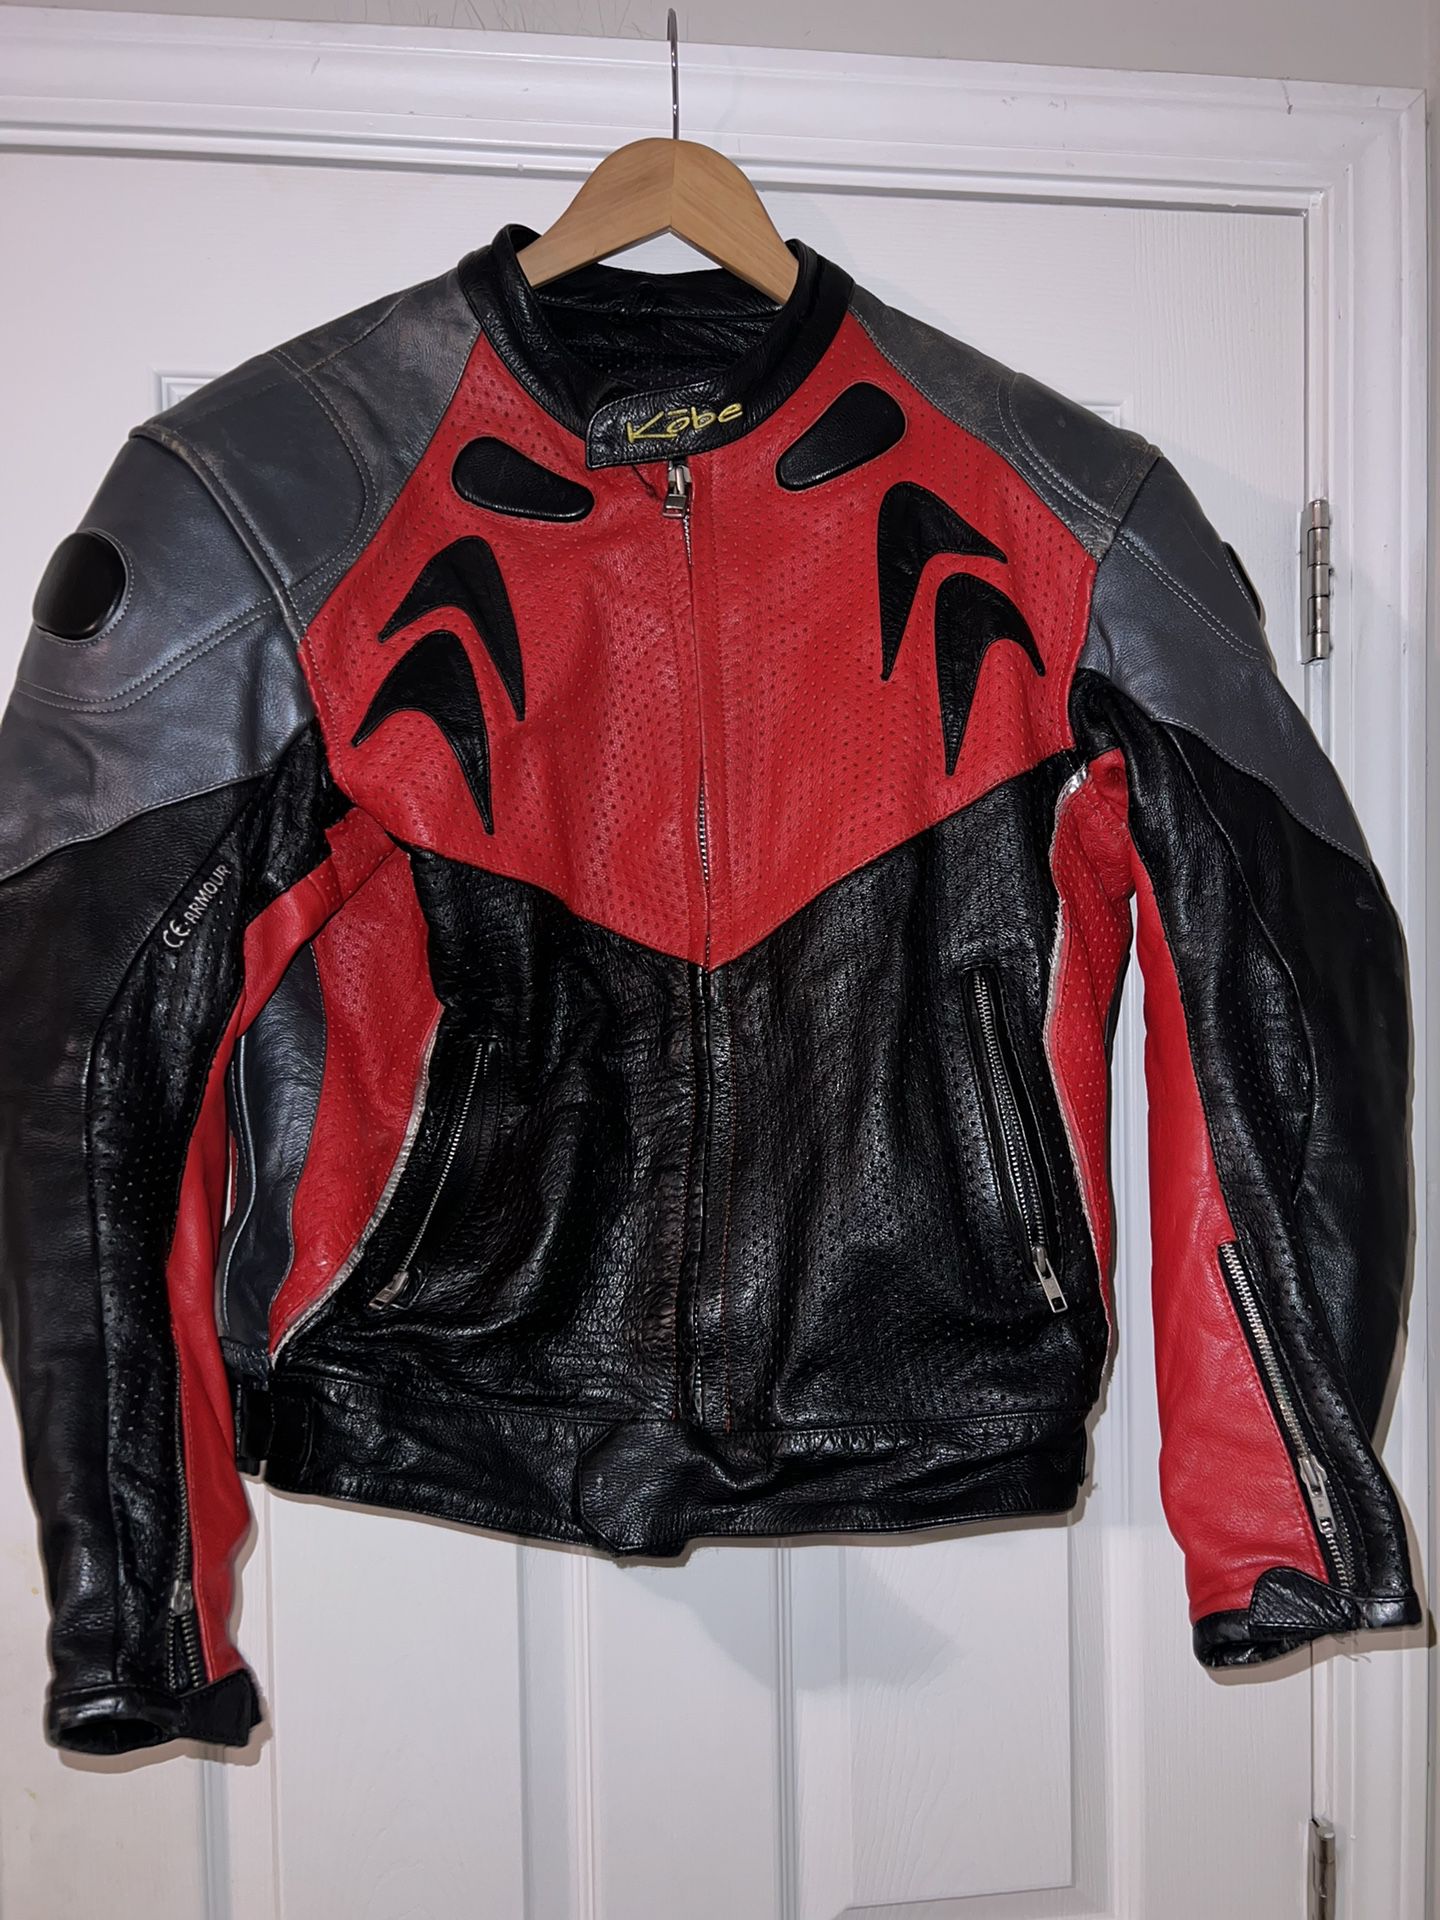 KOBE World Class leather motorcycle jacket size 48/L